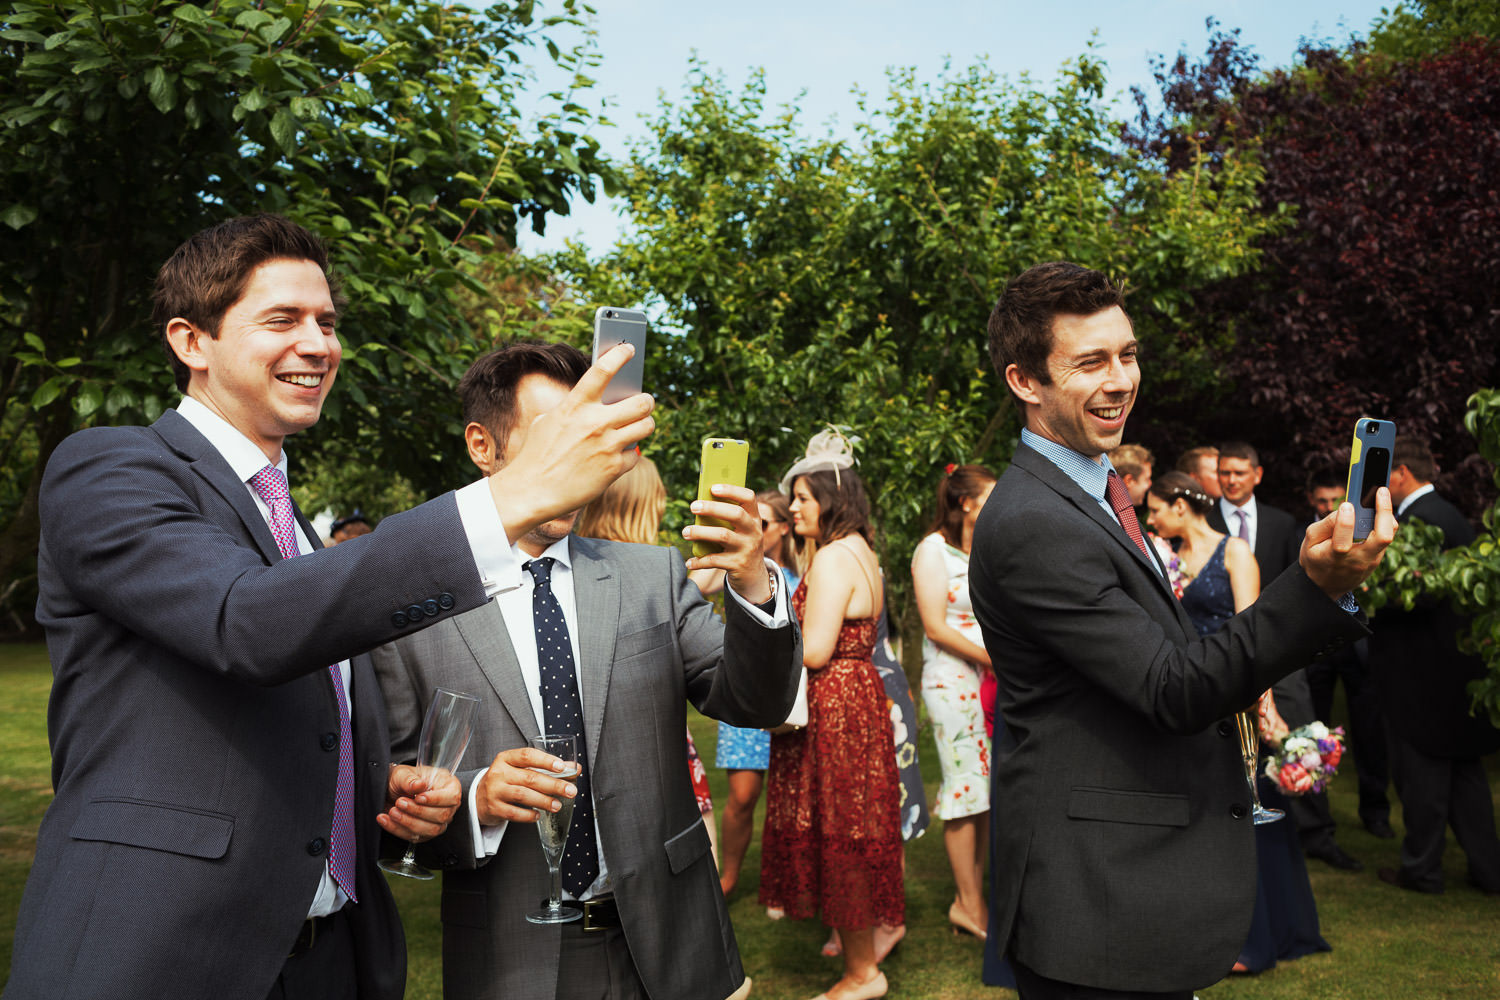 Men taking photos with their phones in a garden at a wedding reception.